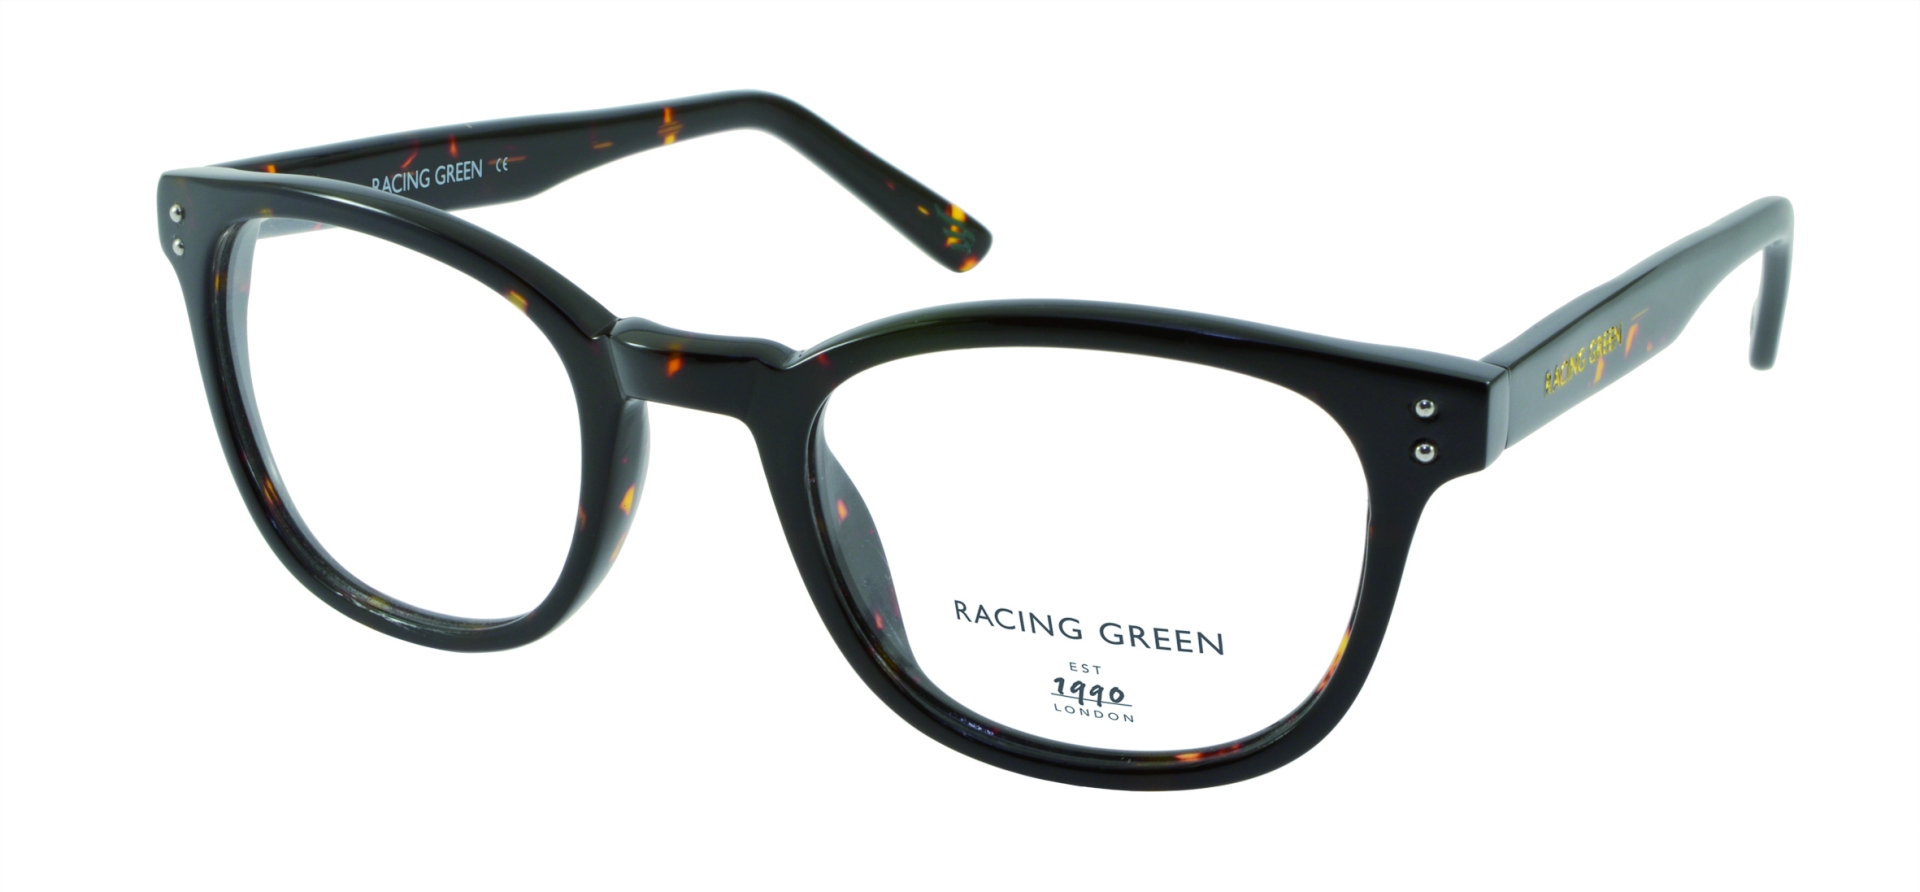 Racing Green 021 c1